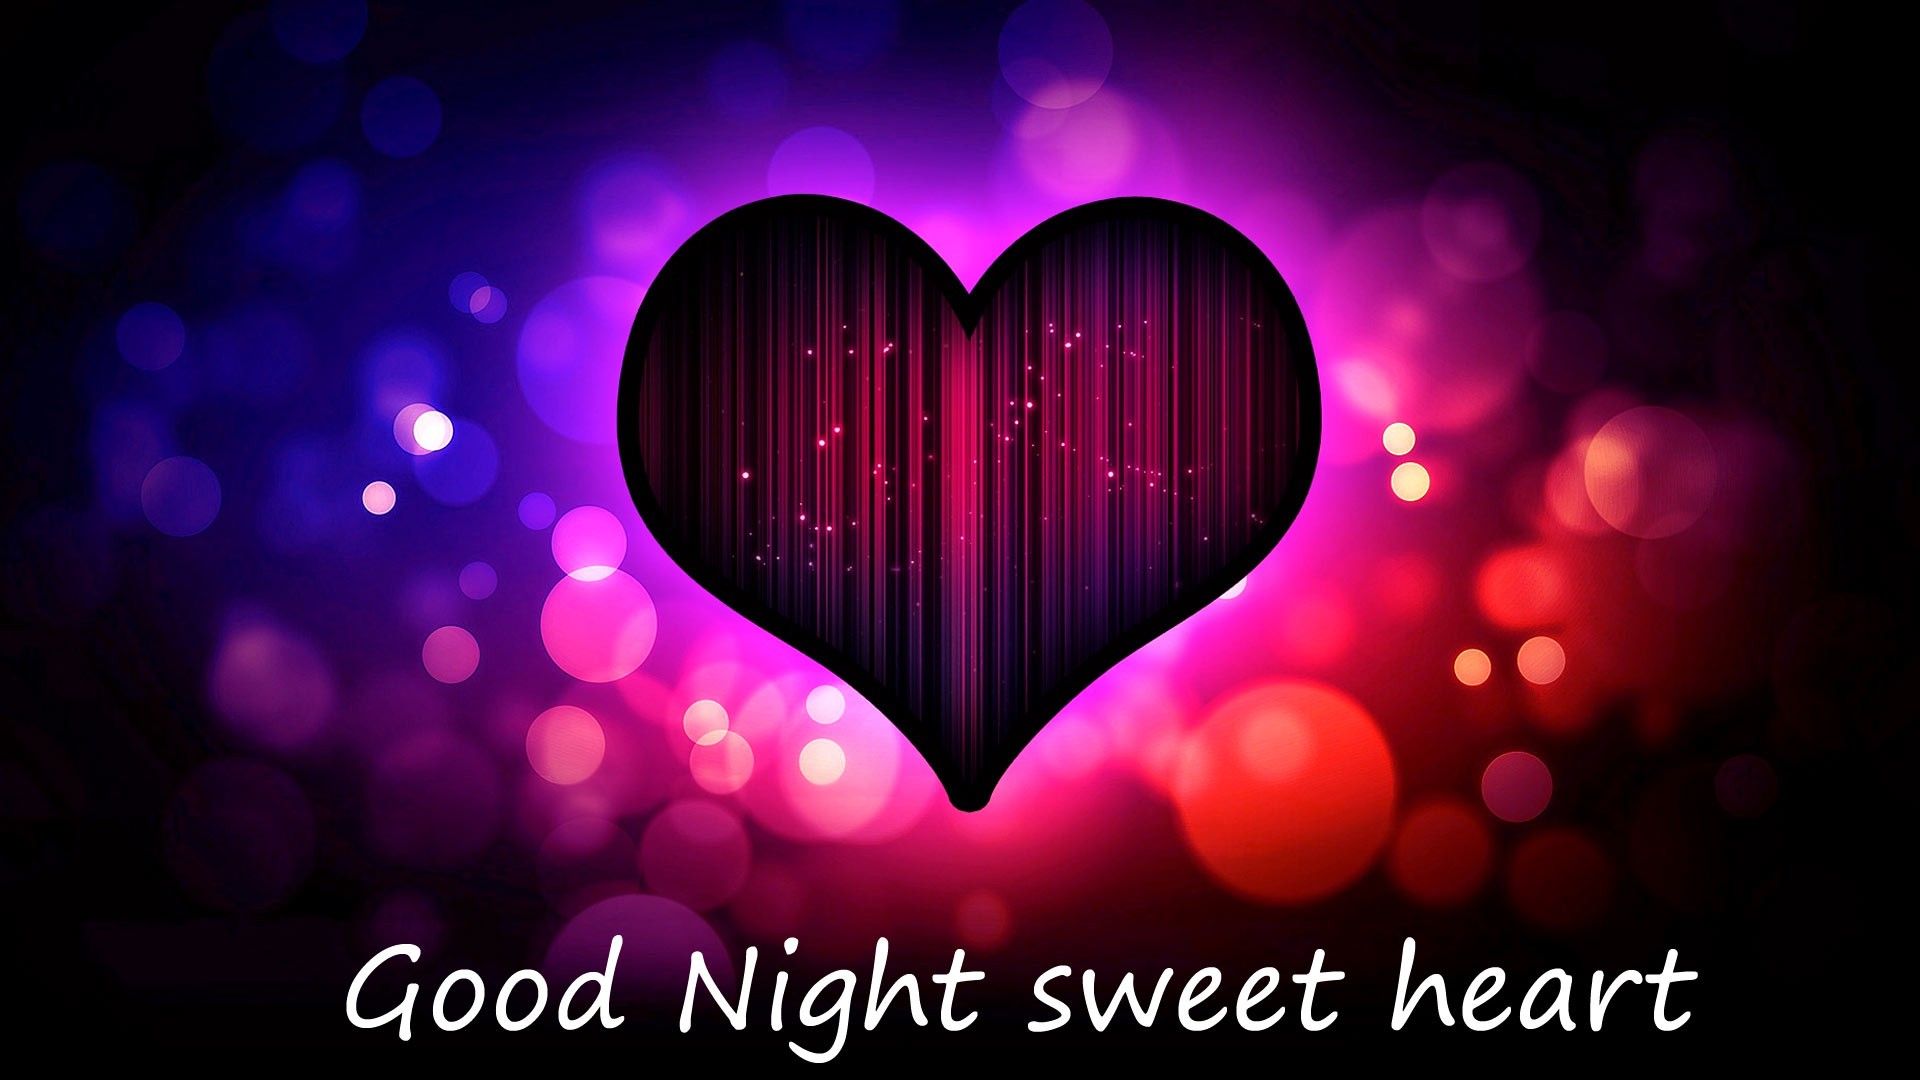 Good Night Sweet Heart Wishes